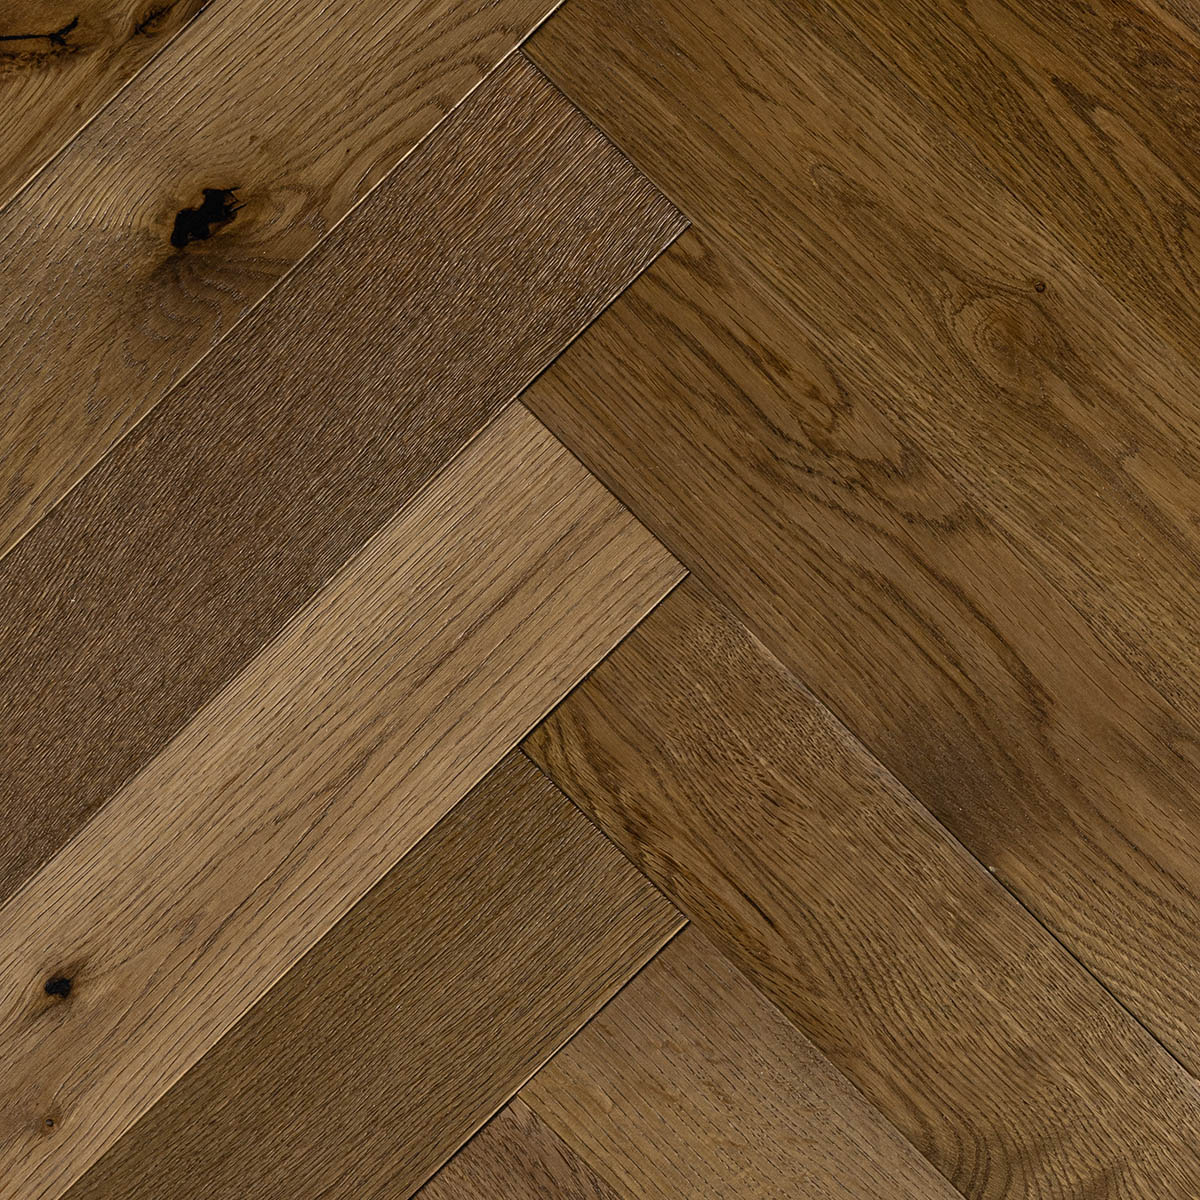 Smokey Rise - Rustic-Grade Oak Herringbone Floor 280mm x 70mm